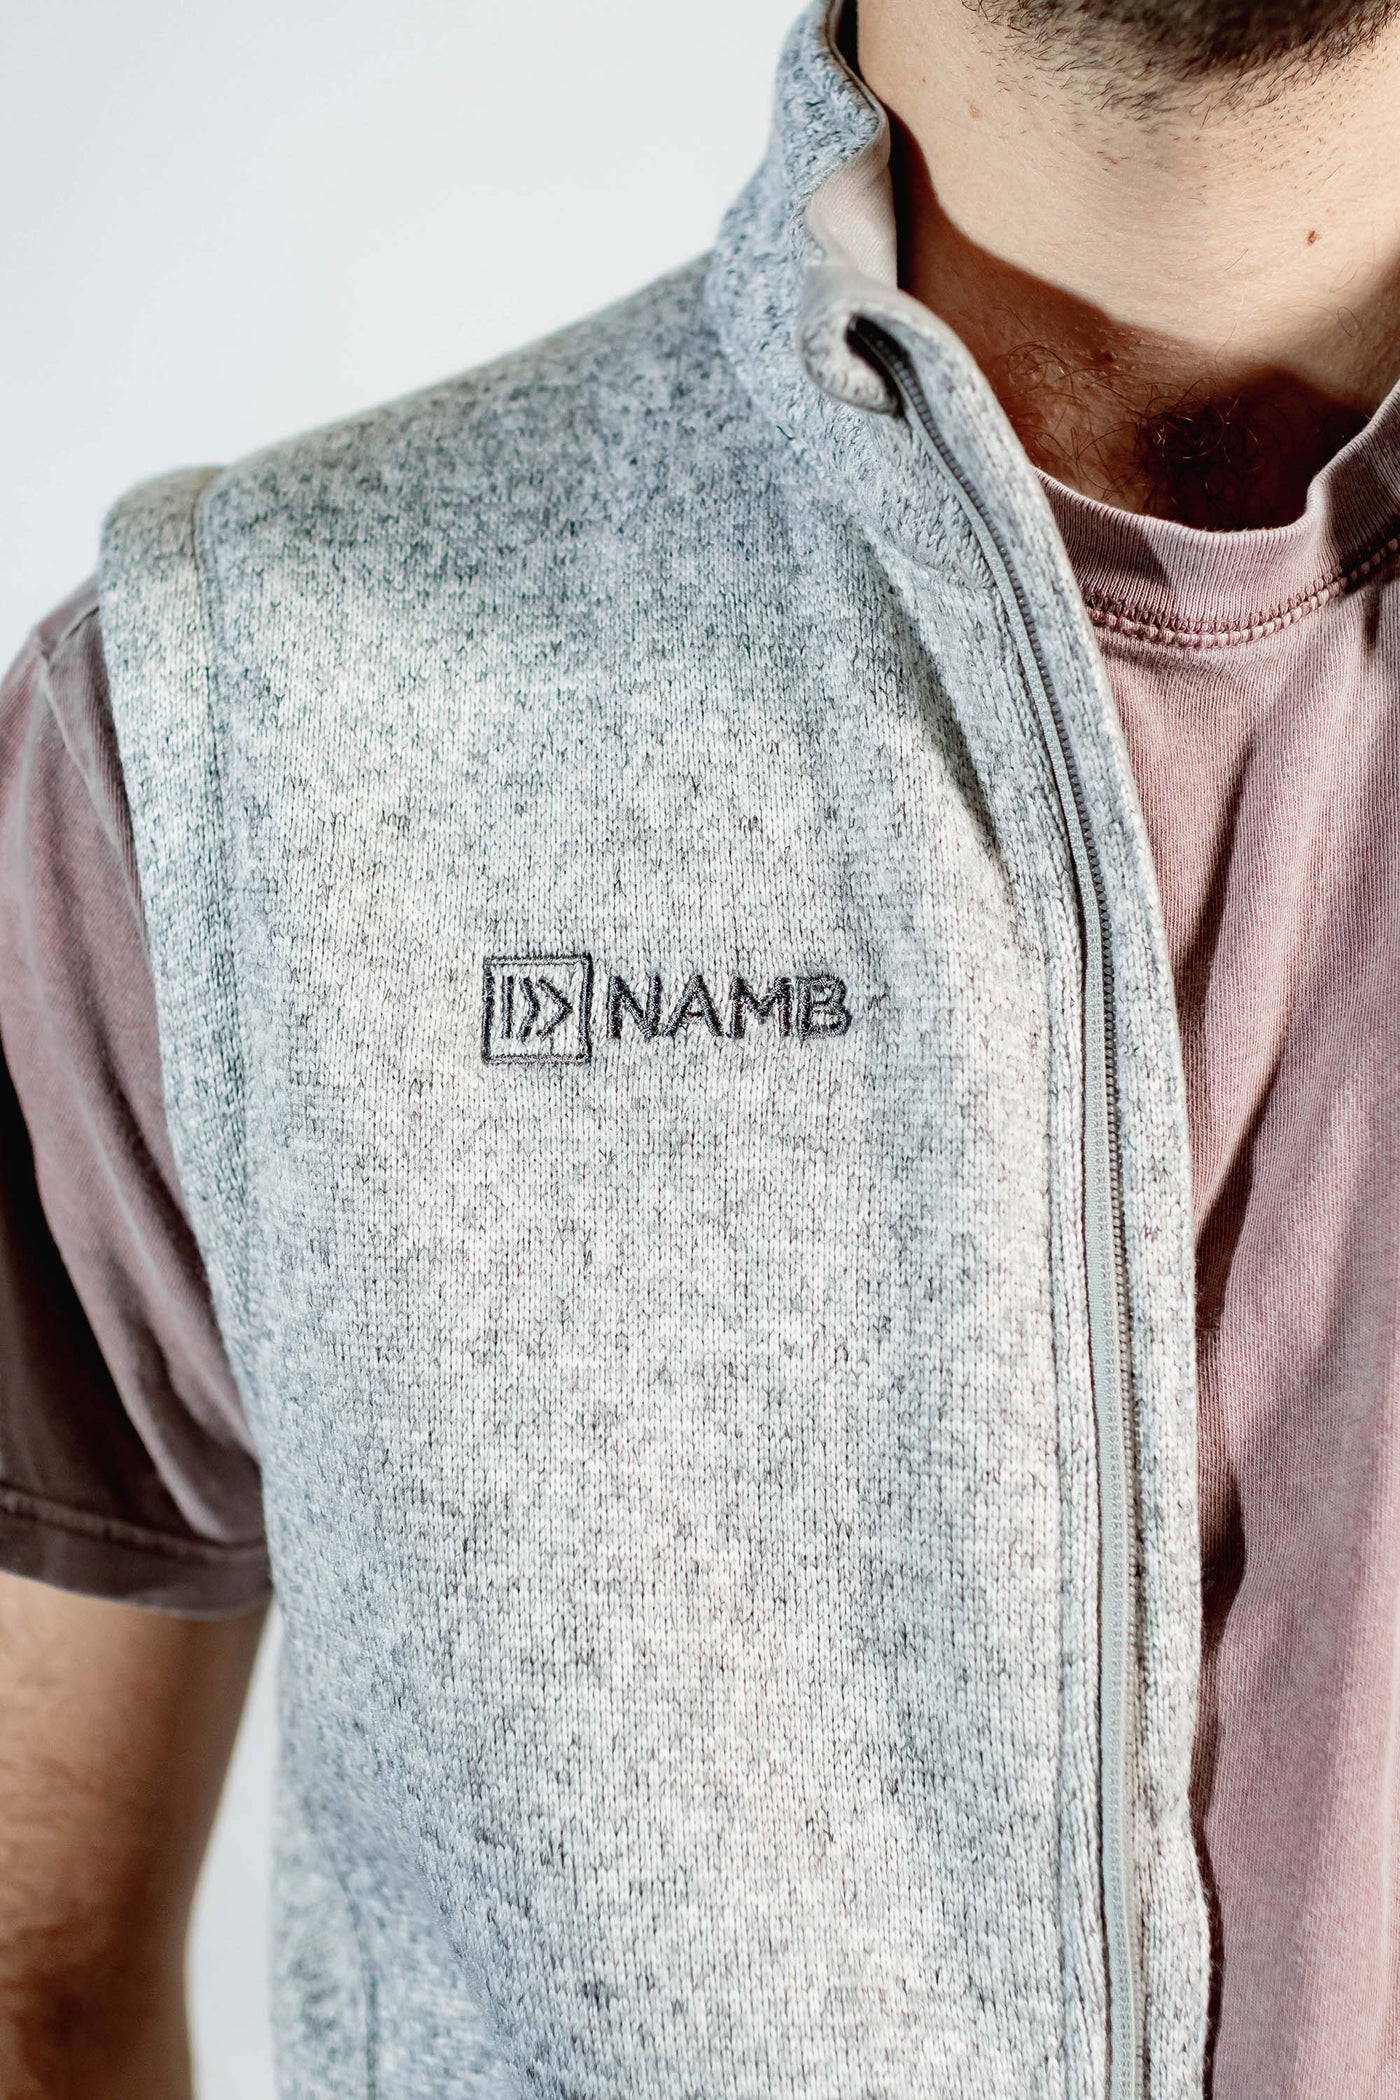 NAMB Embroidered Storm Creek Vest